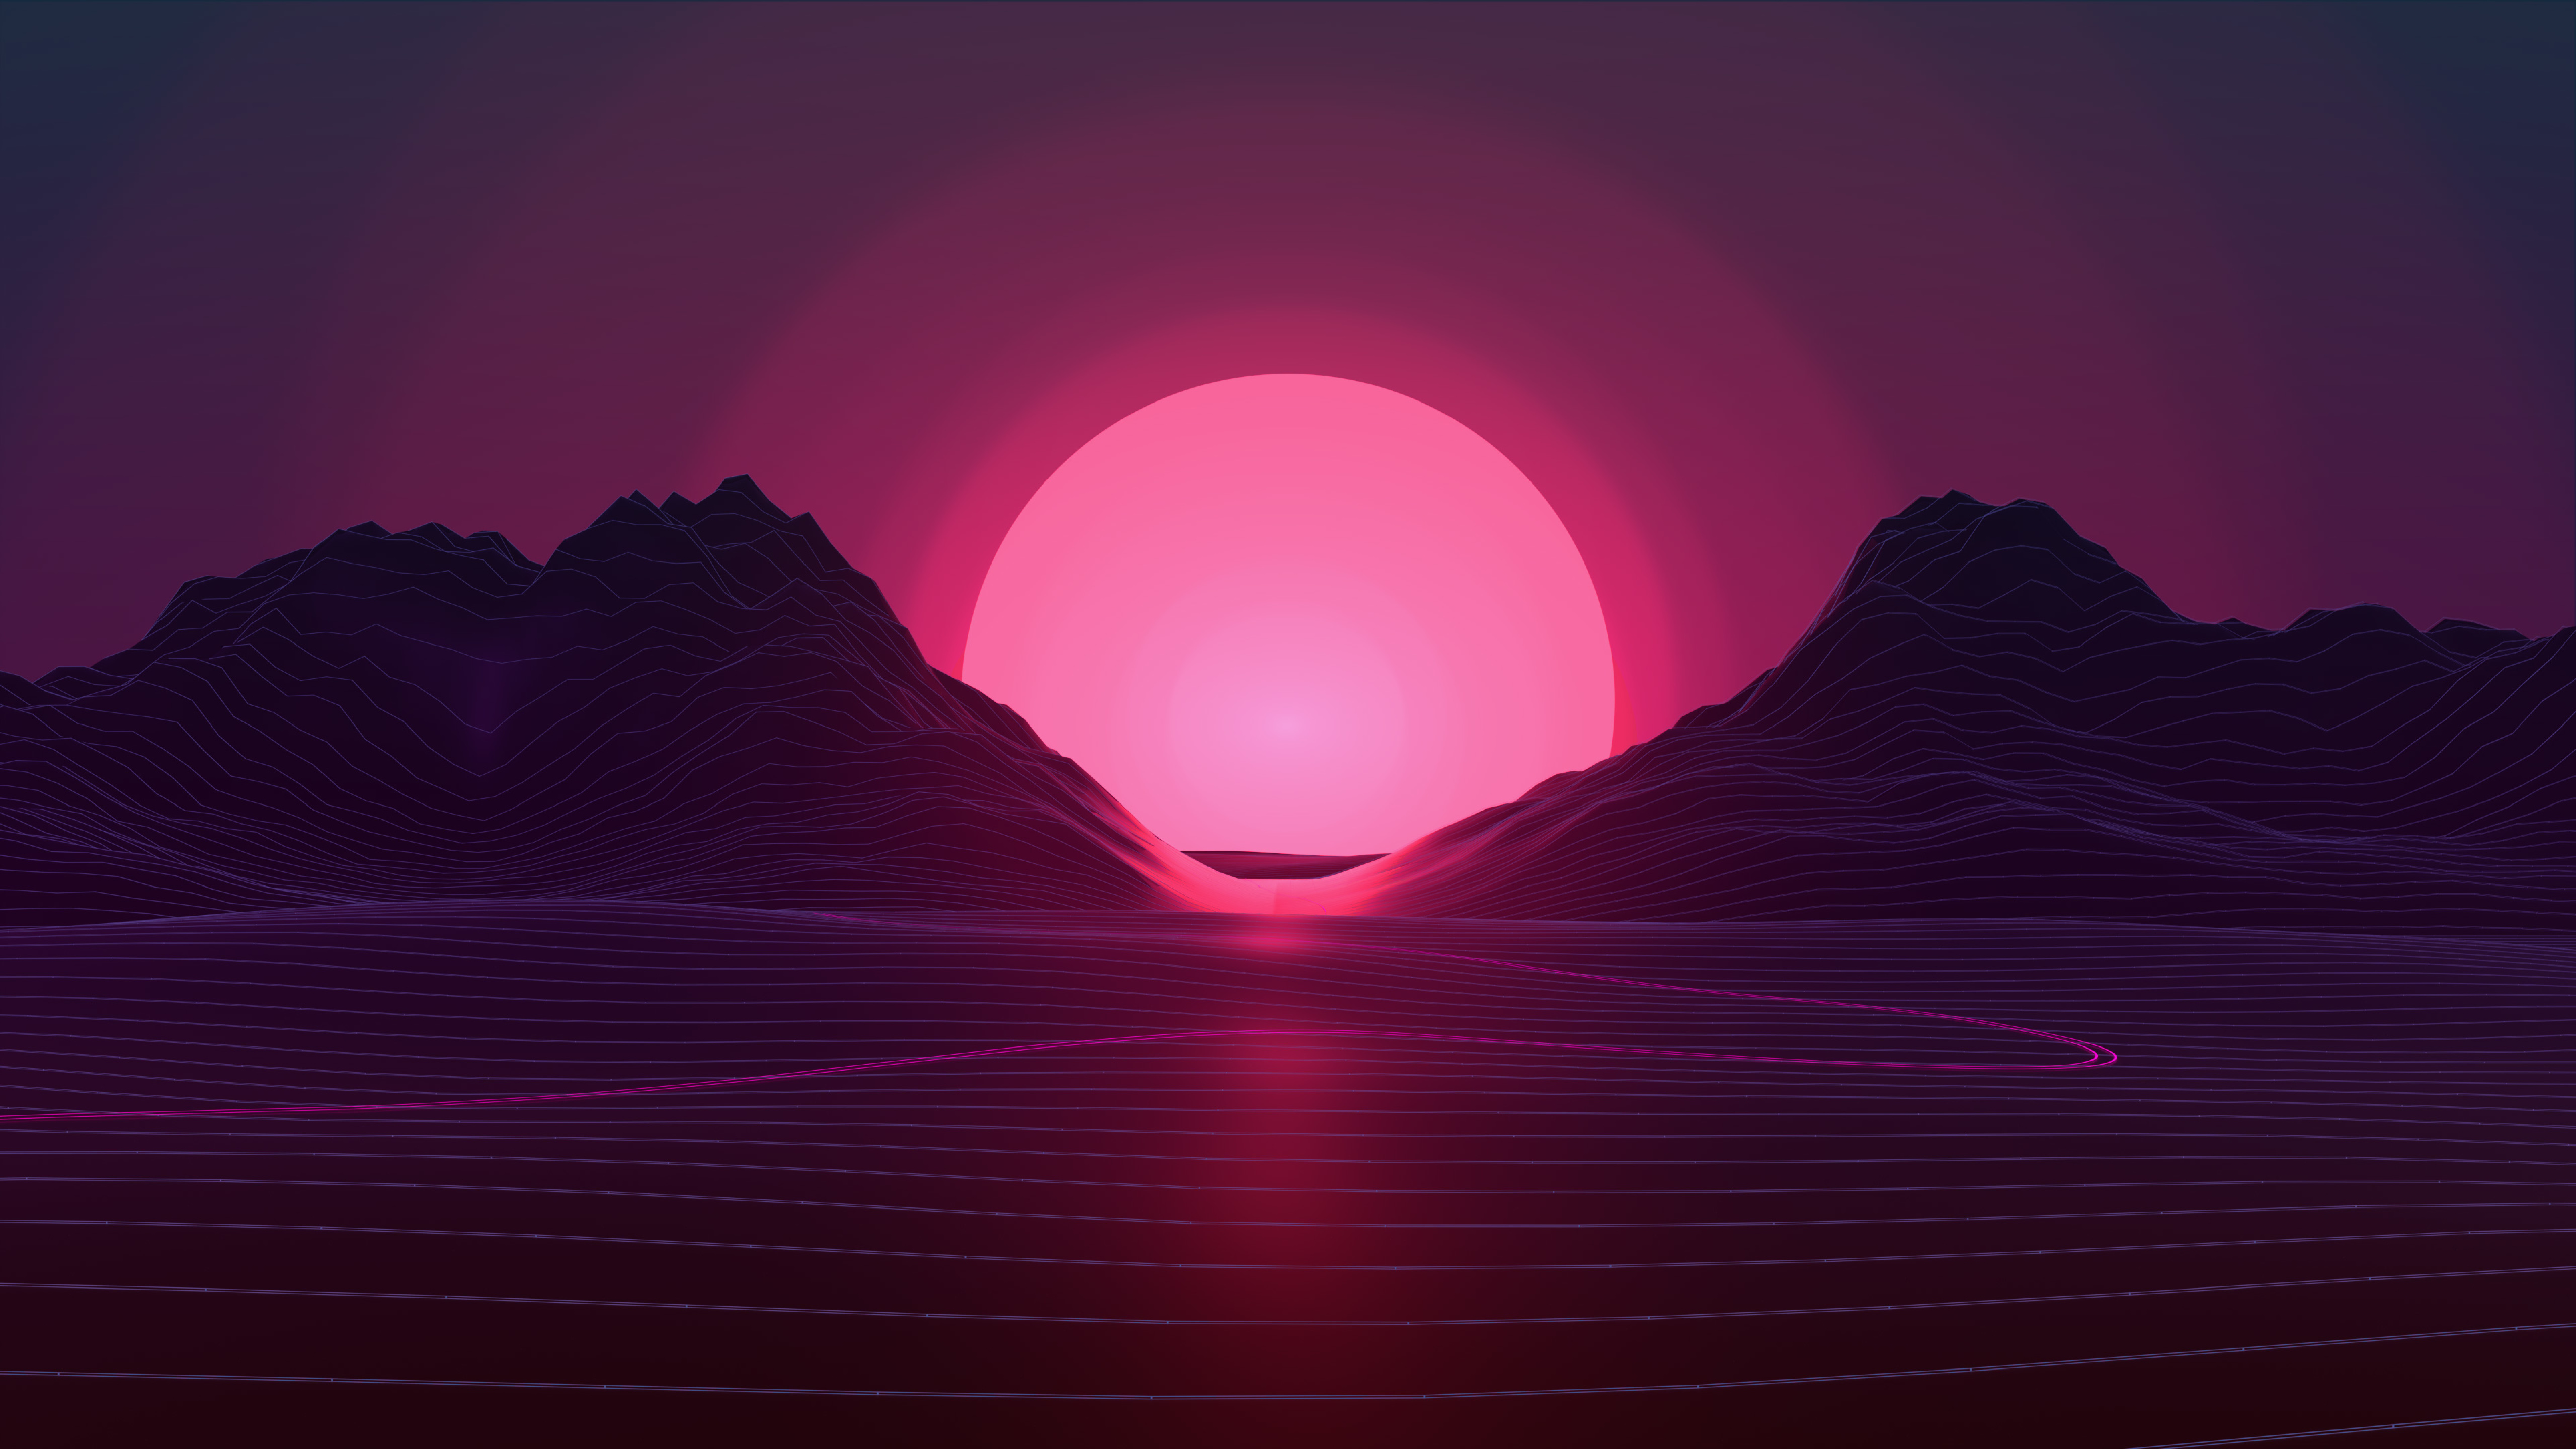 Neon Sunset 5K Wallpaper, HD Artist 4K Wallpaper, Image